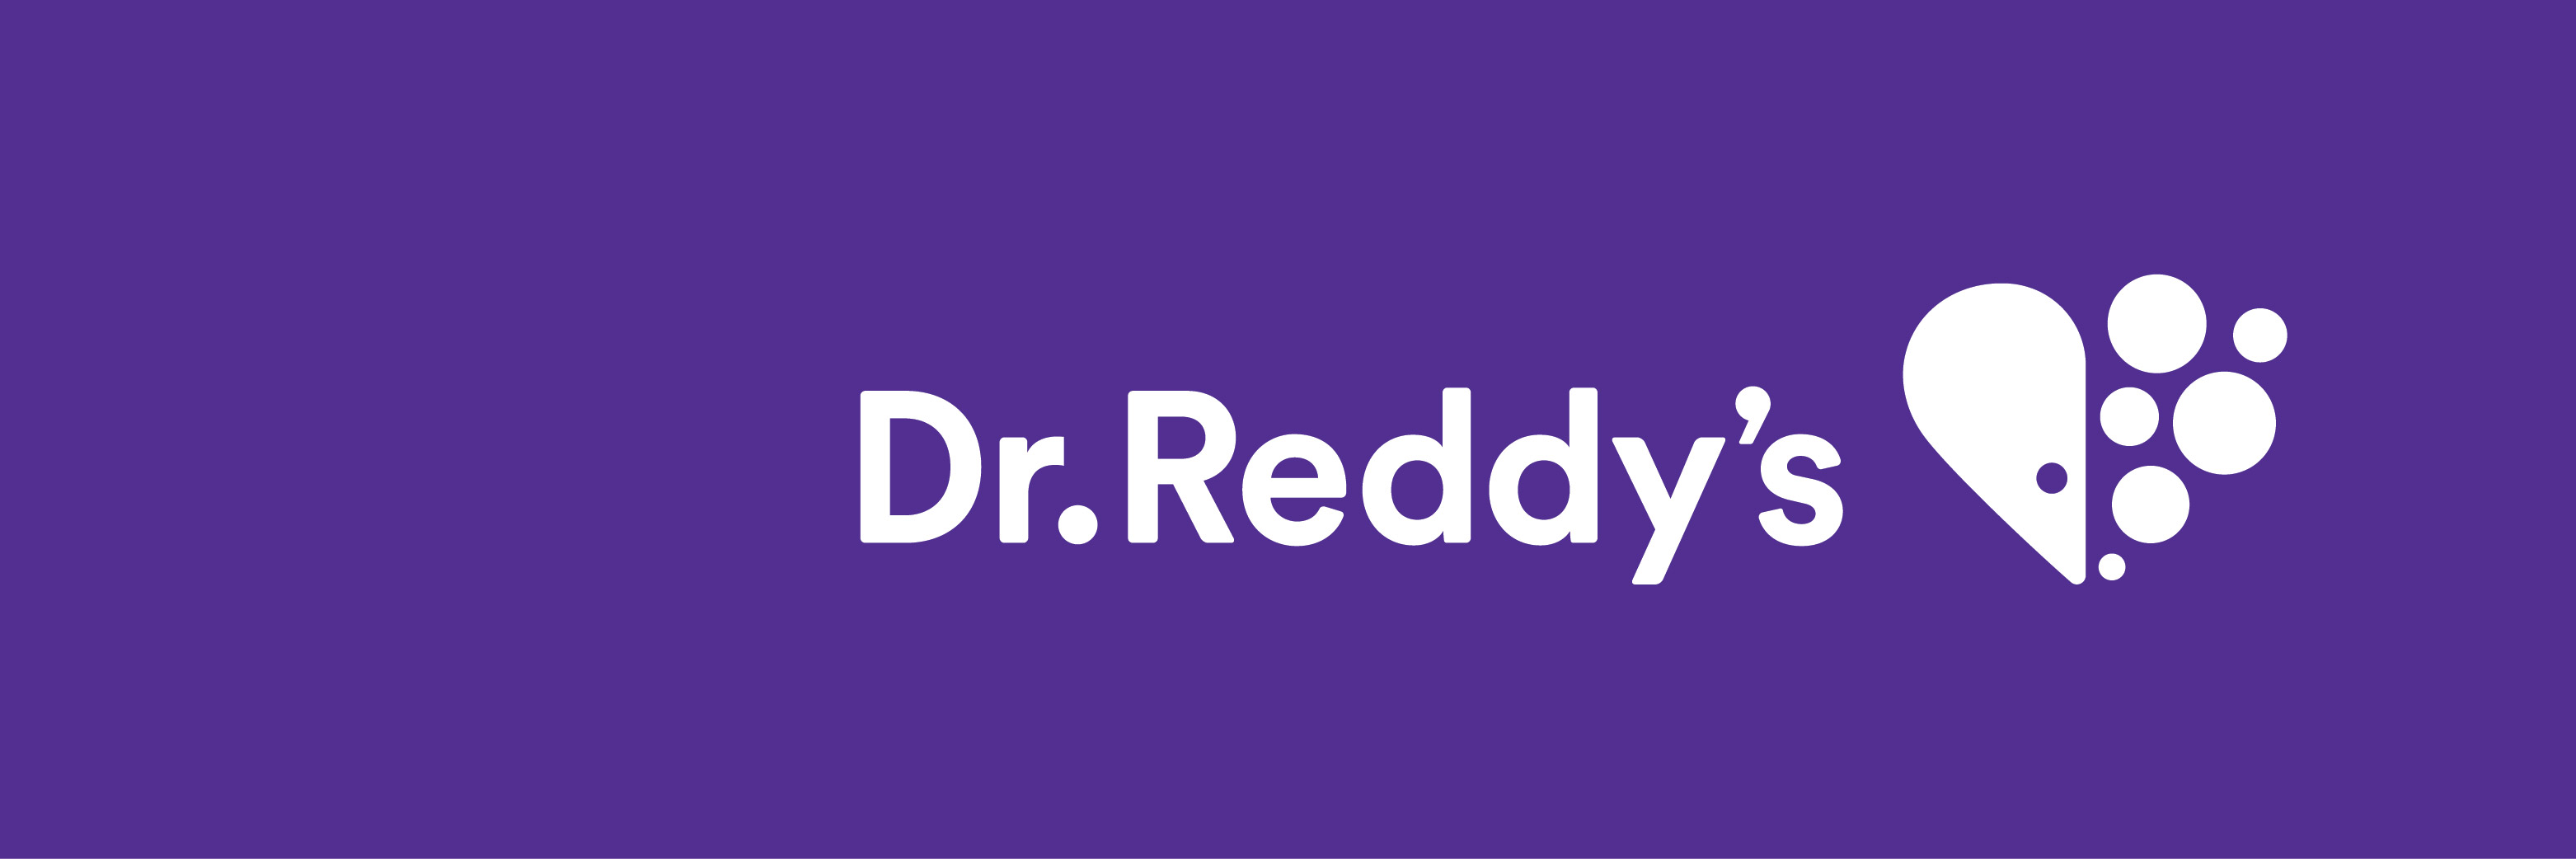 Dr Reddy's generic Zenatane renters US market after approved REMS Program